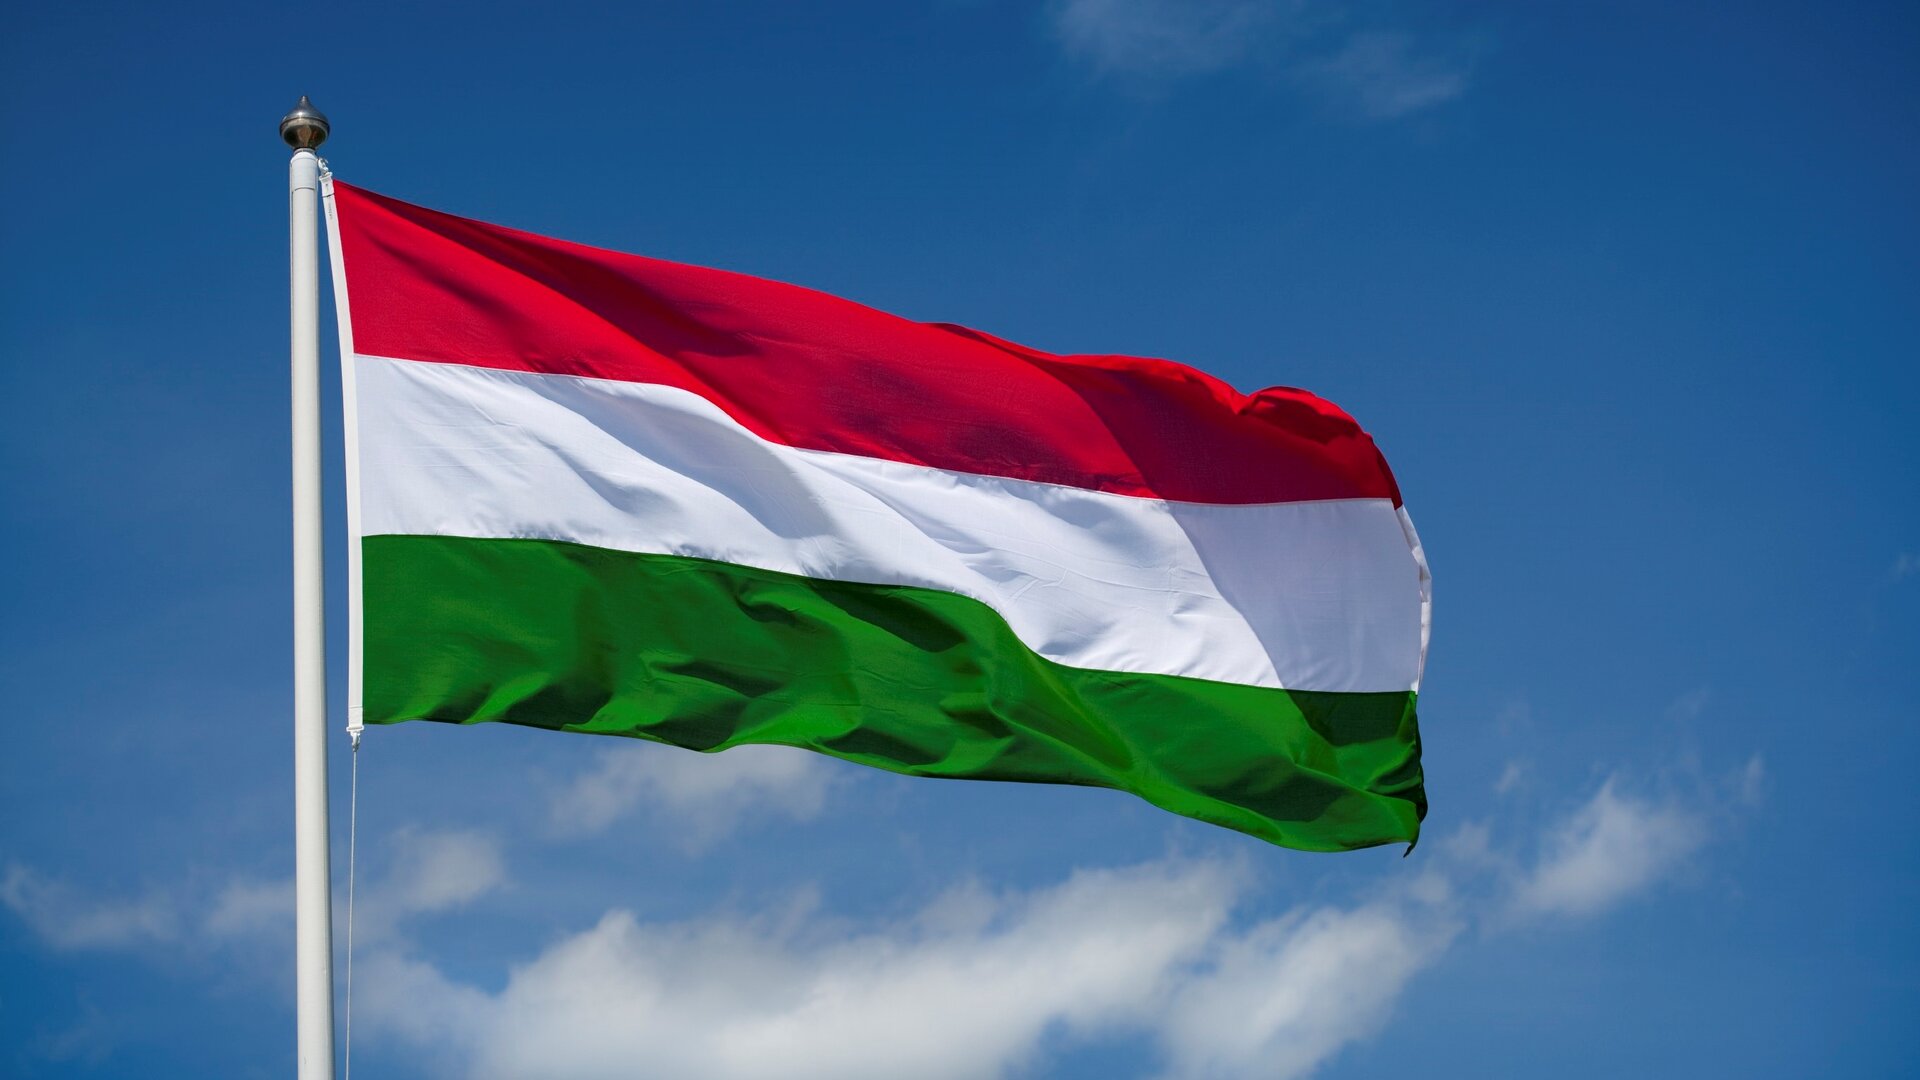 Flag of Hungary pillars